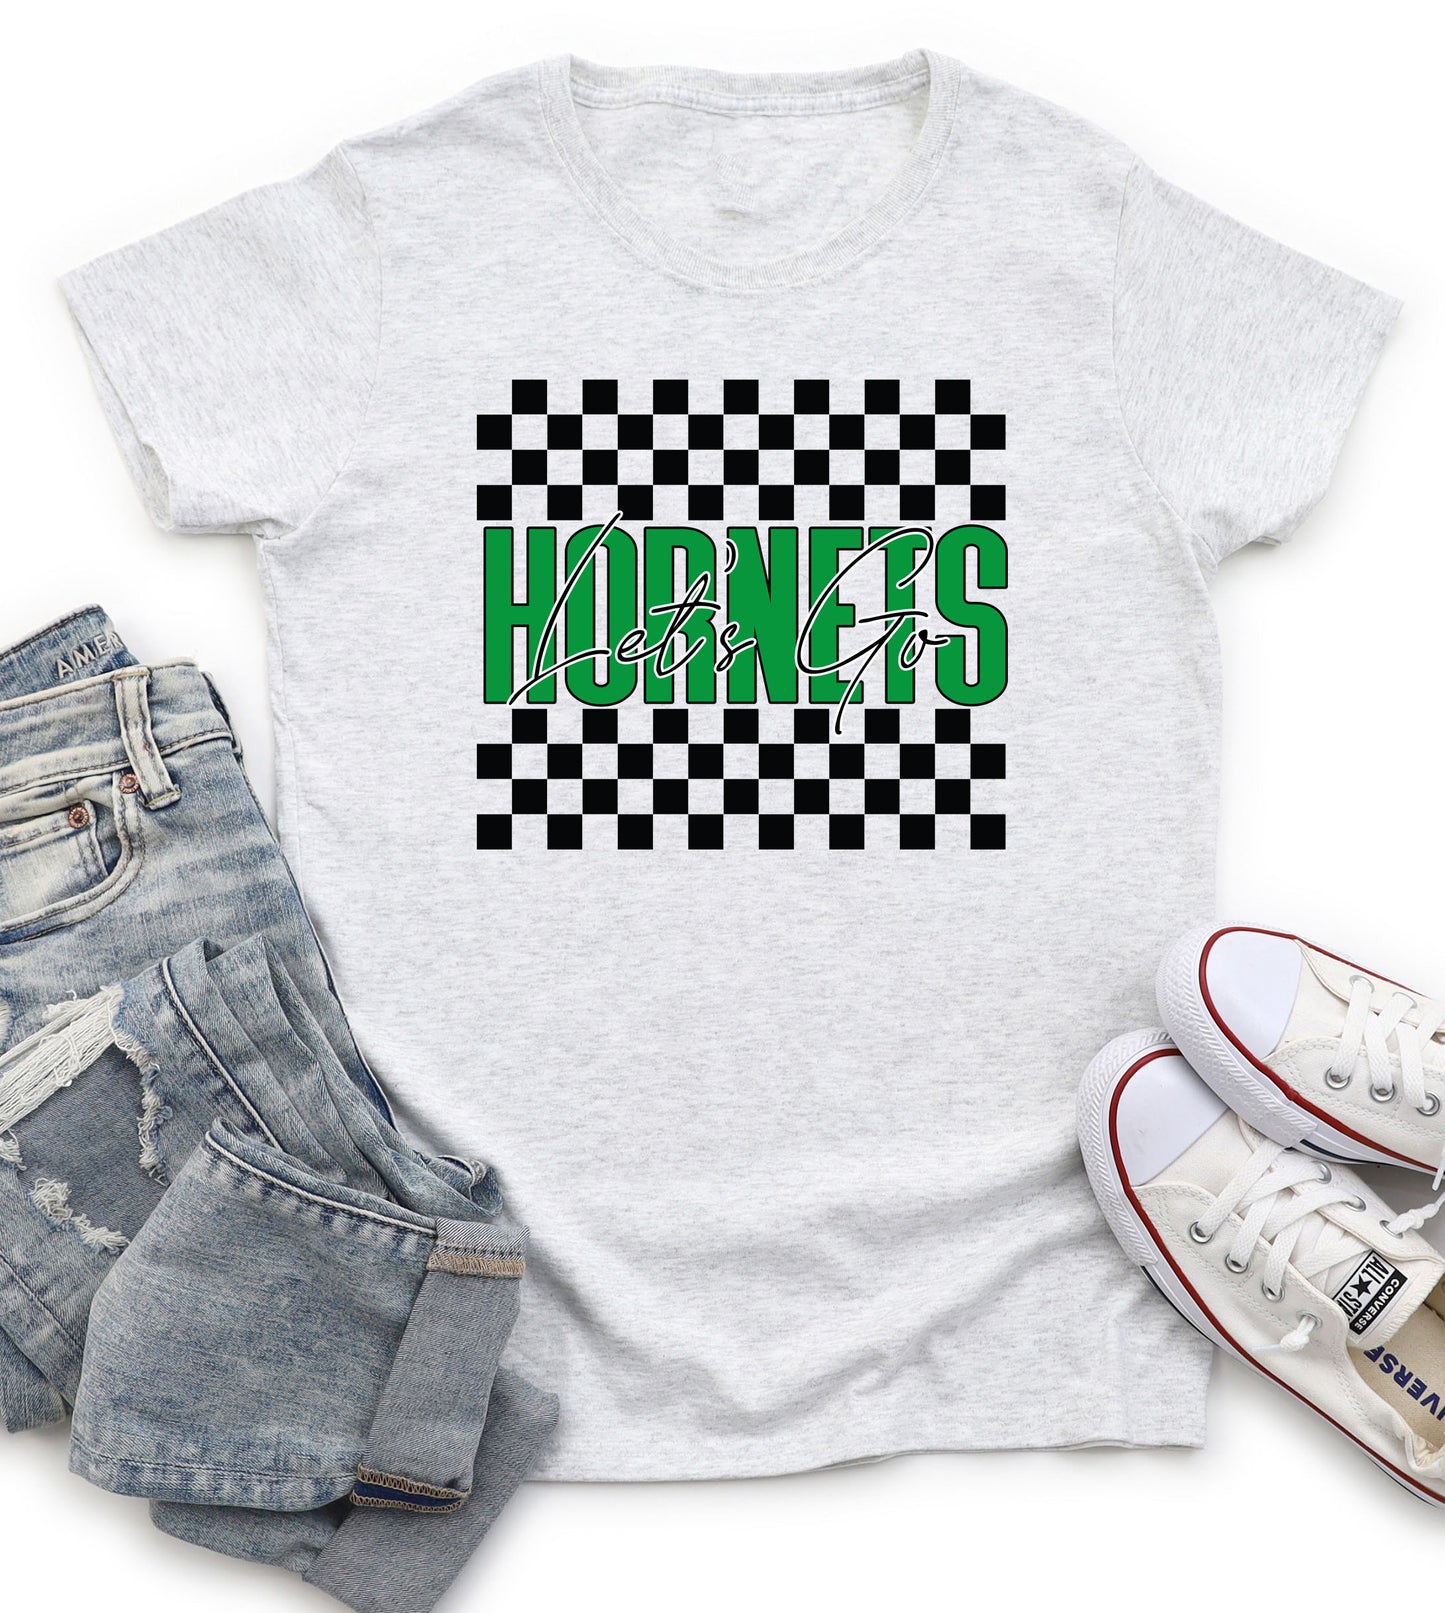 Checkered Let’s Go Hornets Tee